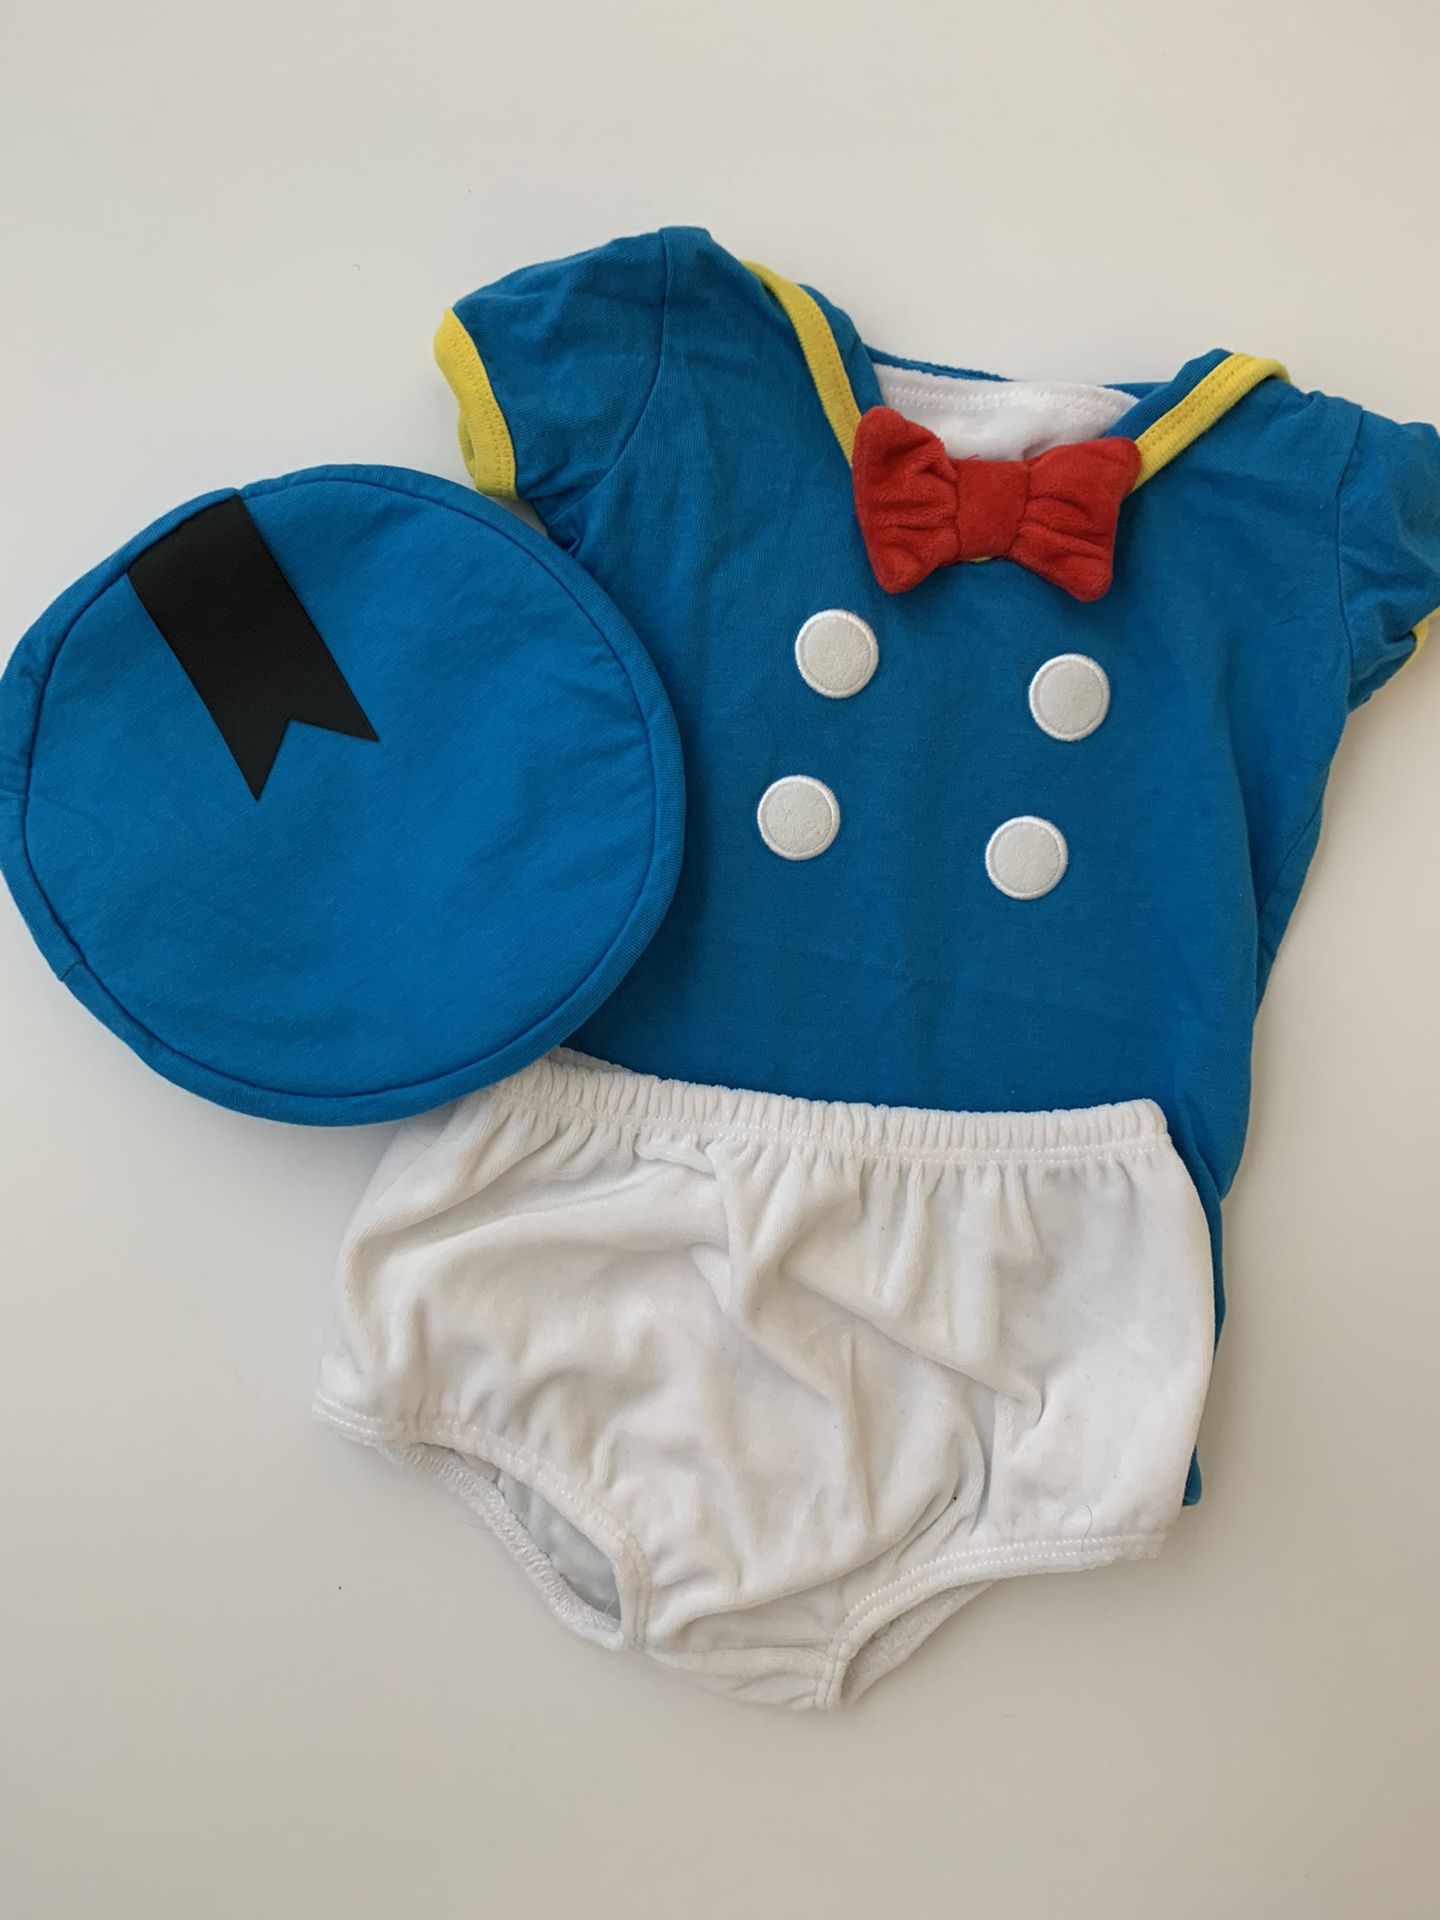 Disney Donald Duck baby costume 12months